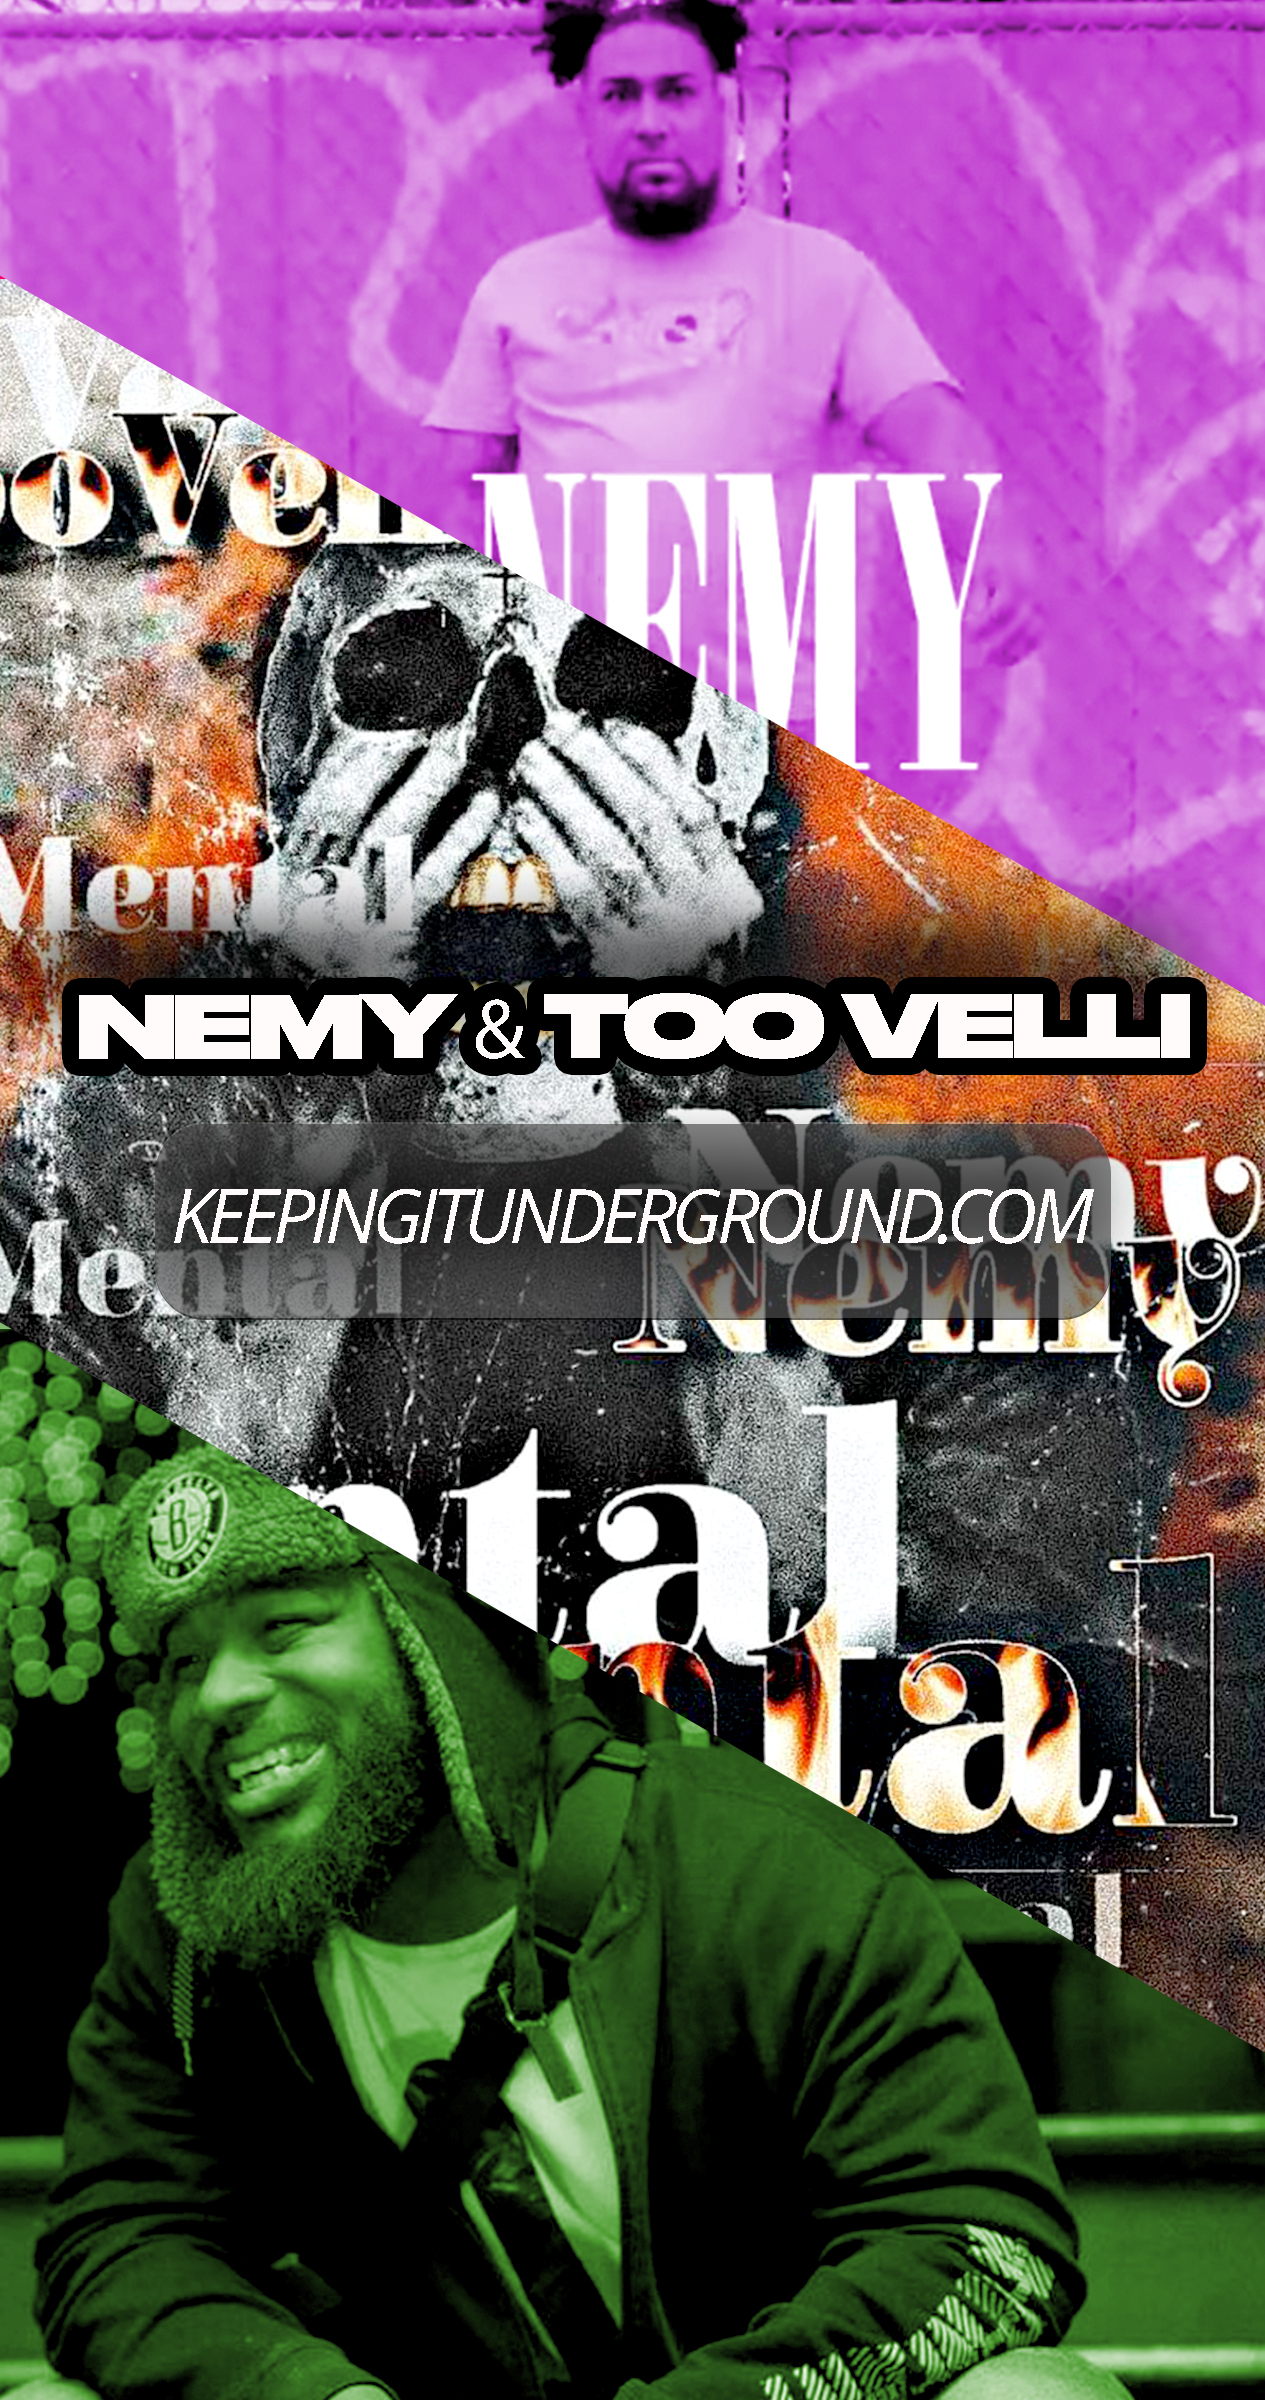 Nemy & Too Velli "MENTAL"